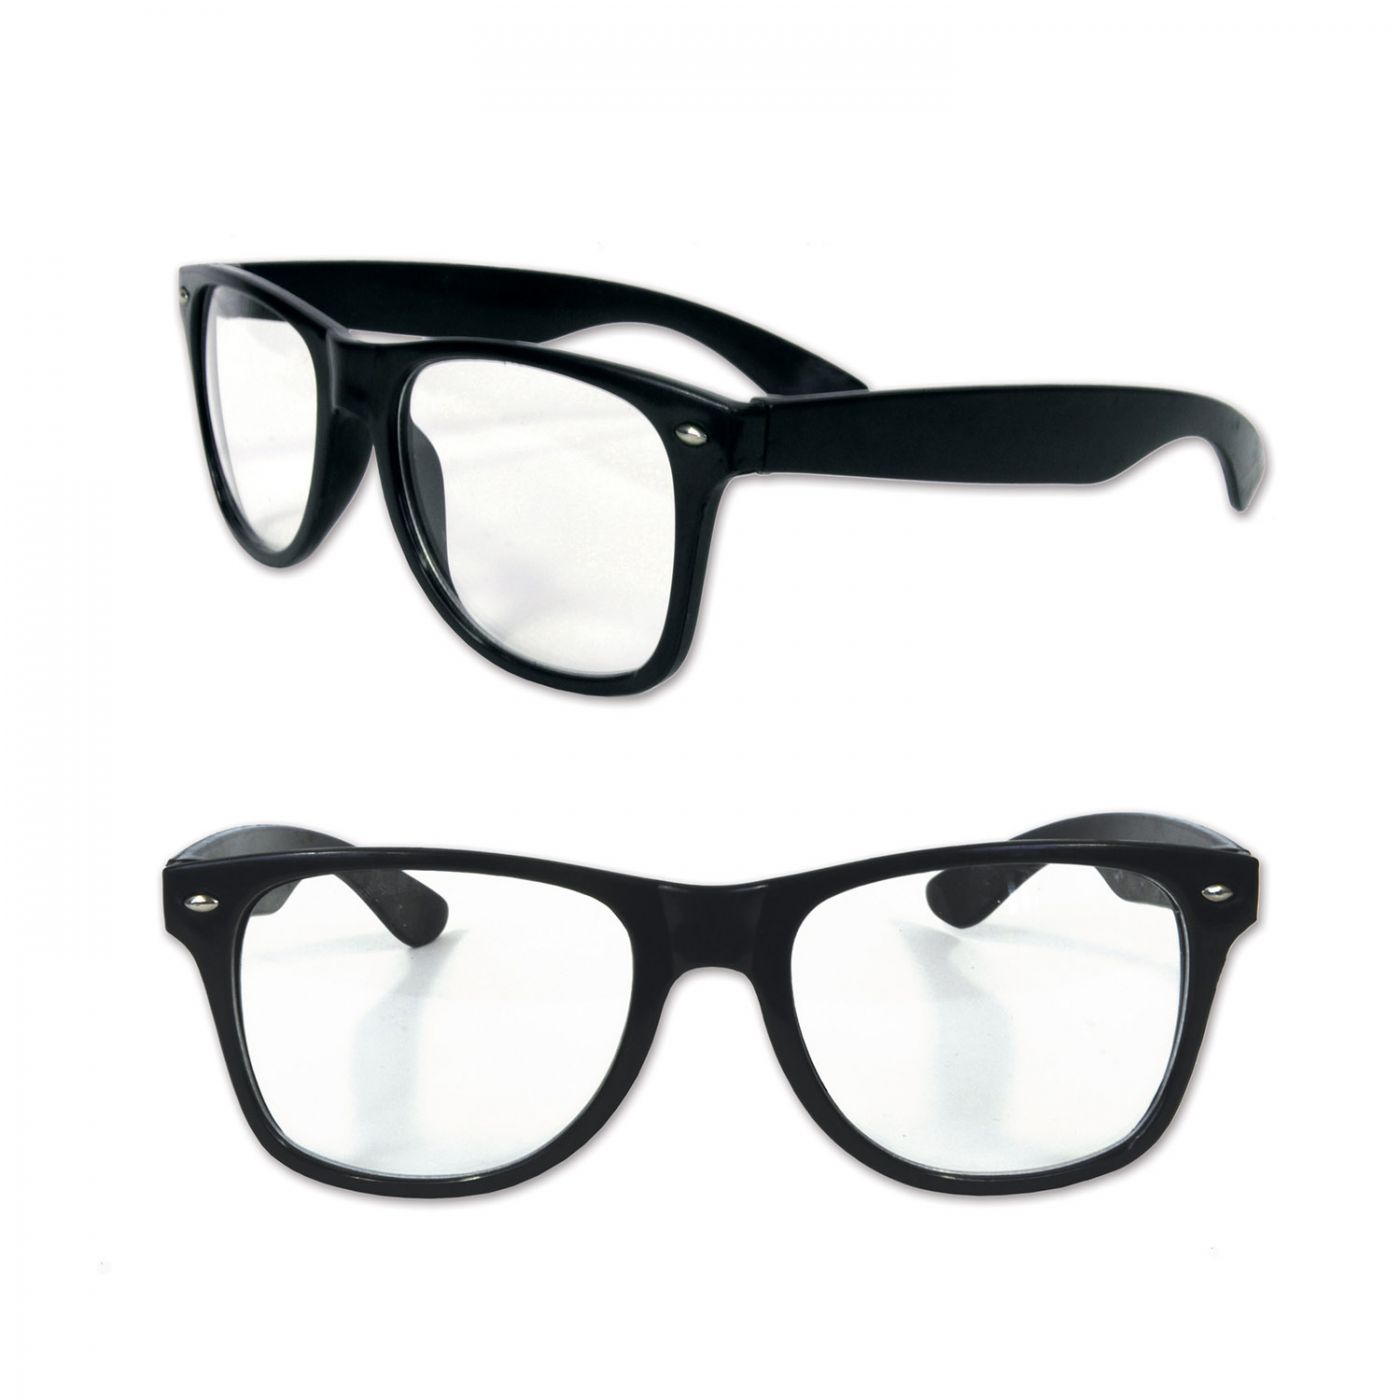 Horn Rimmed Glasses (6) image